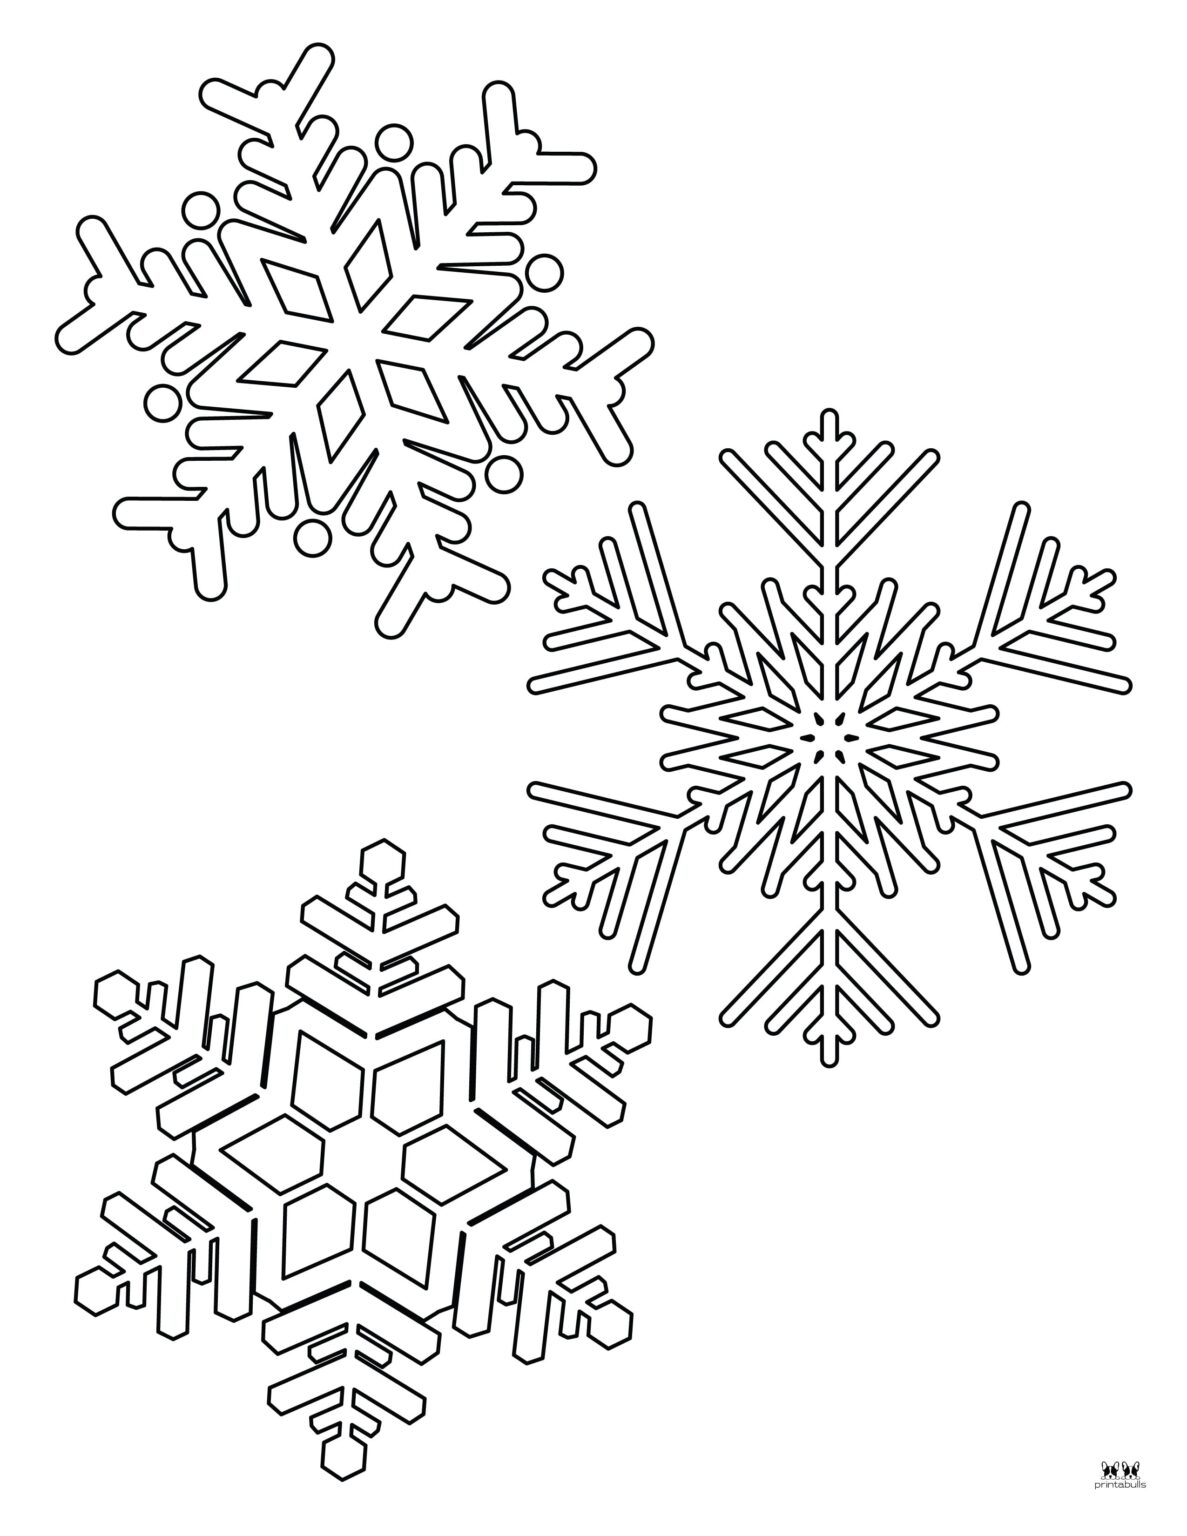 Snowflake Coloring Pages - 25 FREE Printable Pages | Printabulls